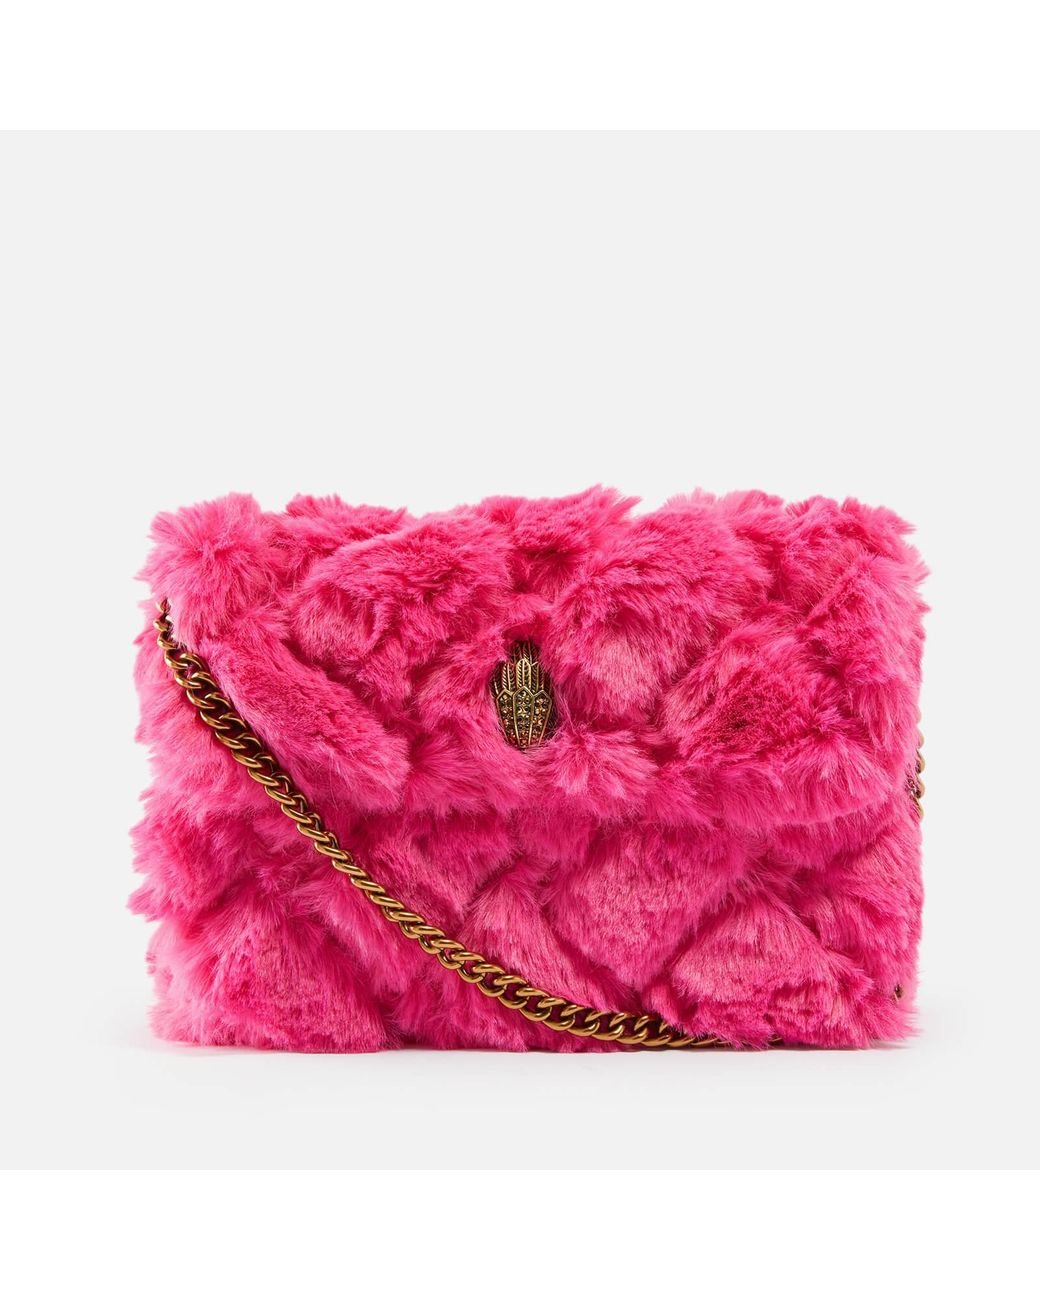 Kurt Geiger Medium Kensington Faux Fur Bag in Pink | Lyst Canada